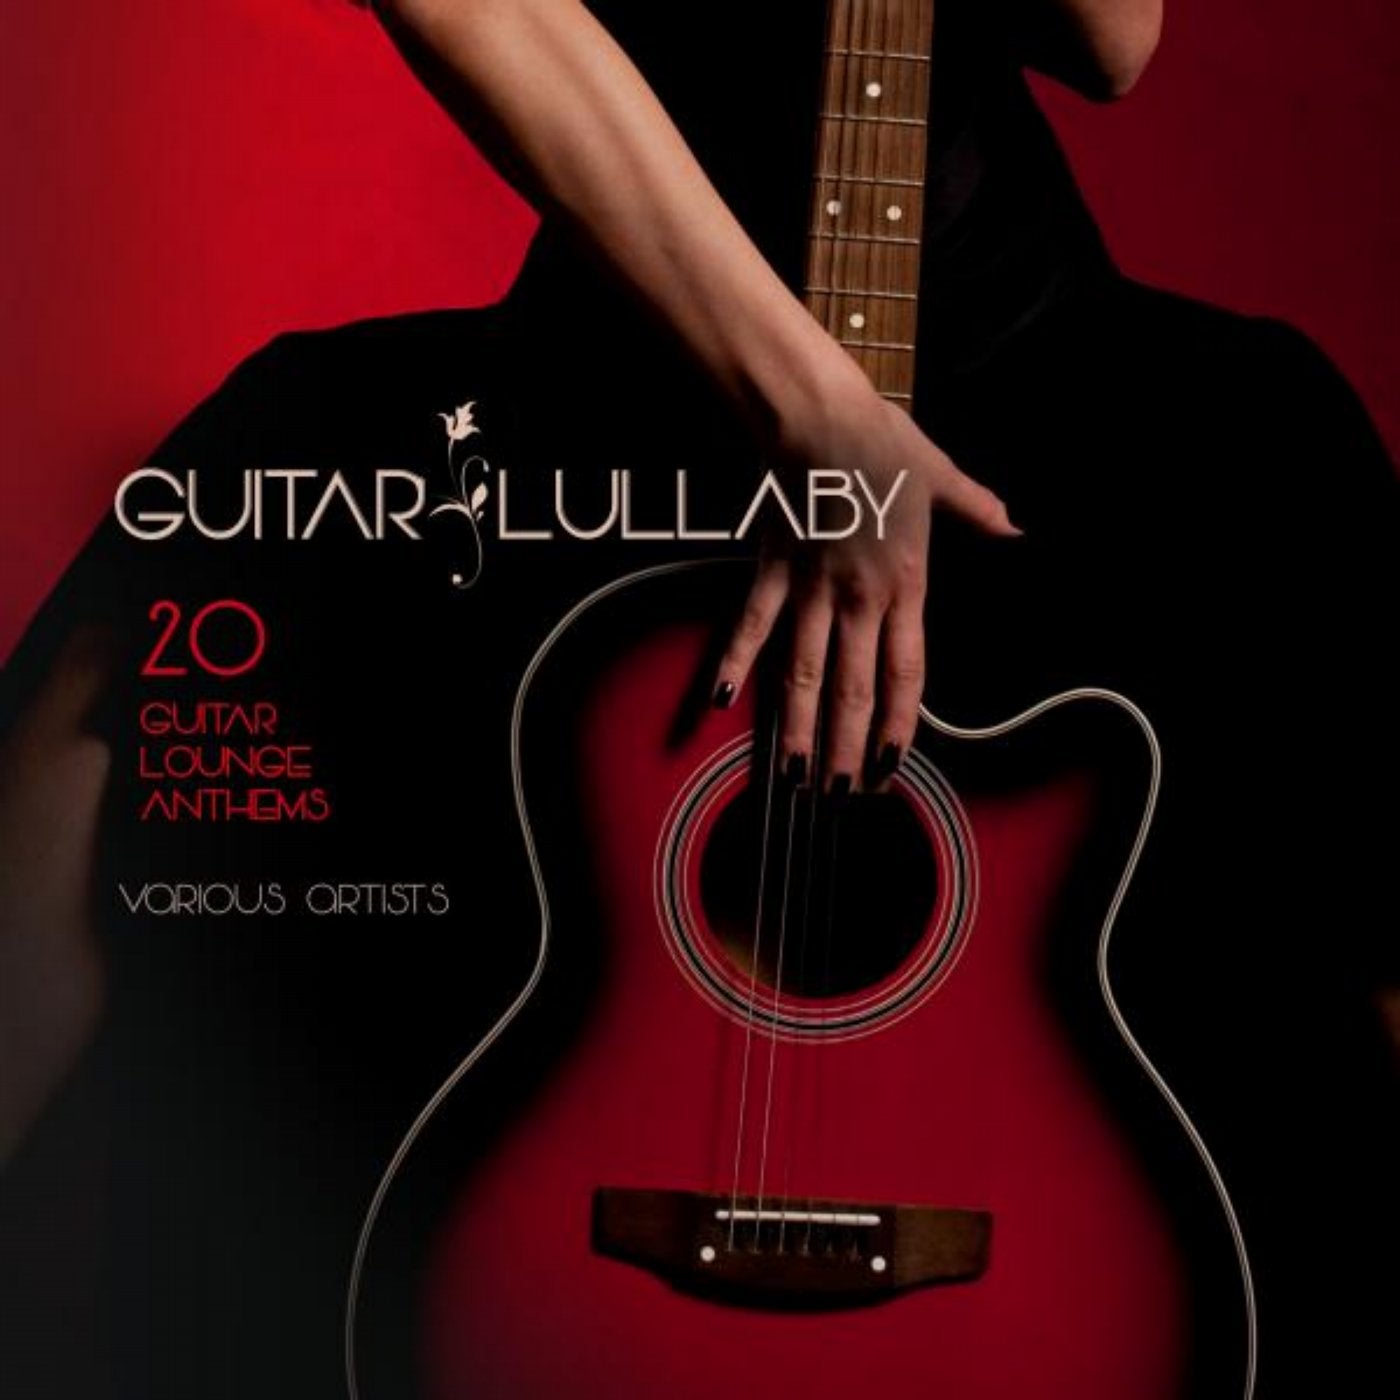 Guitar Lullaby (20 Guitar Lounge Anthems)